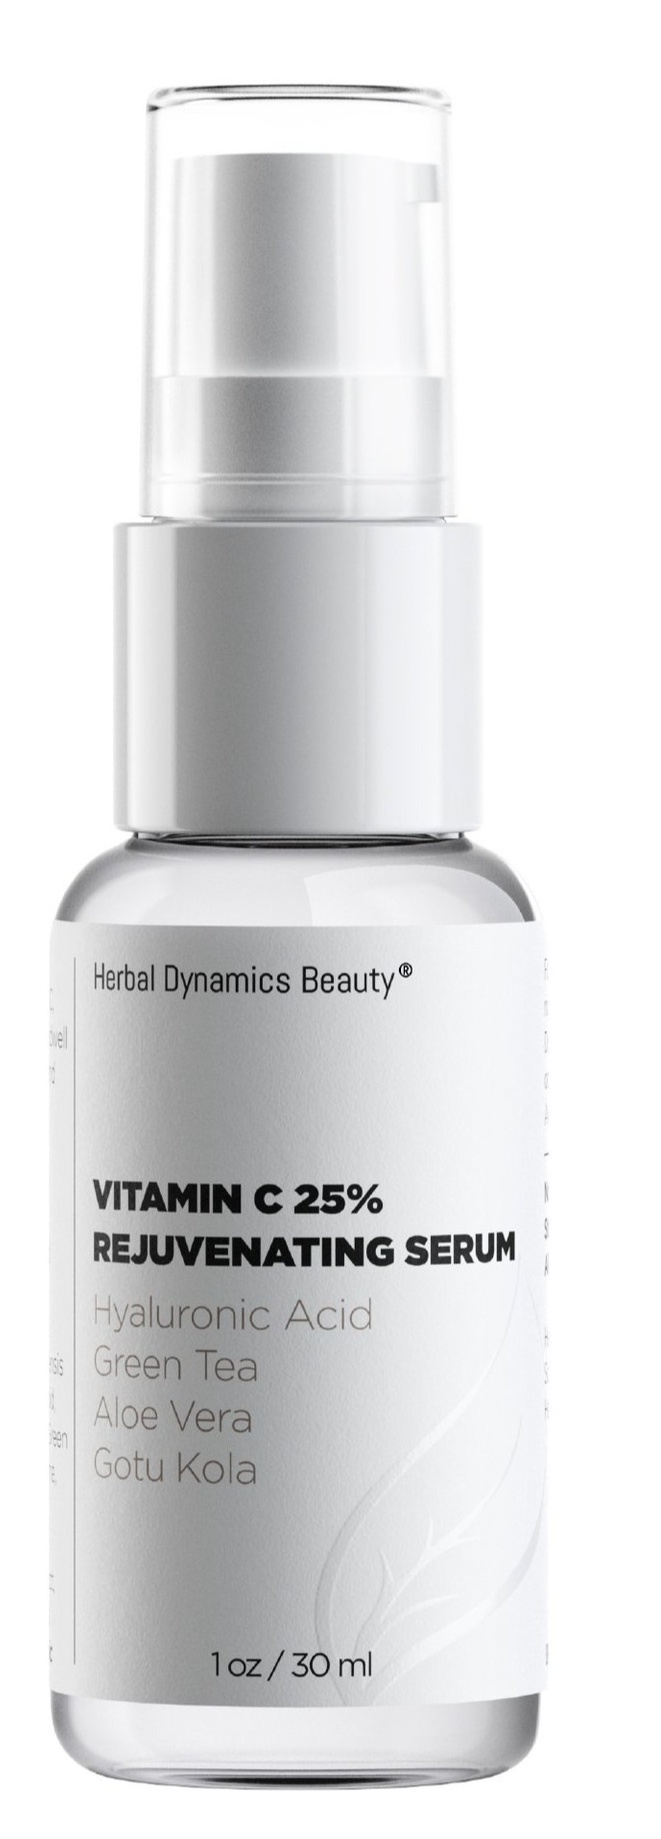 Herbal Dynamics Beauty Vitamin C 25% Rejuvenating Serum 